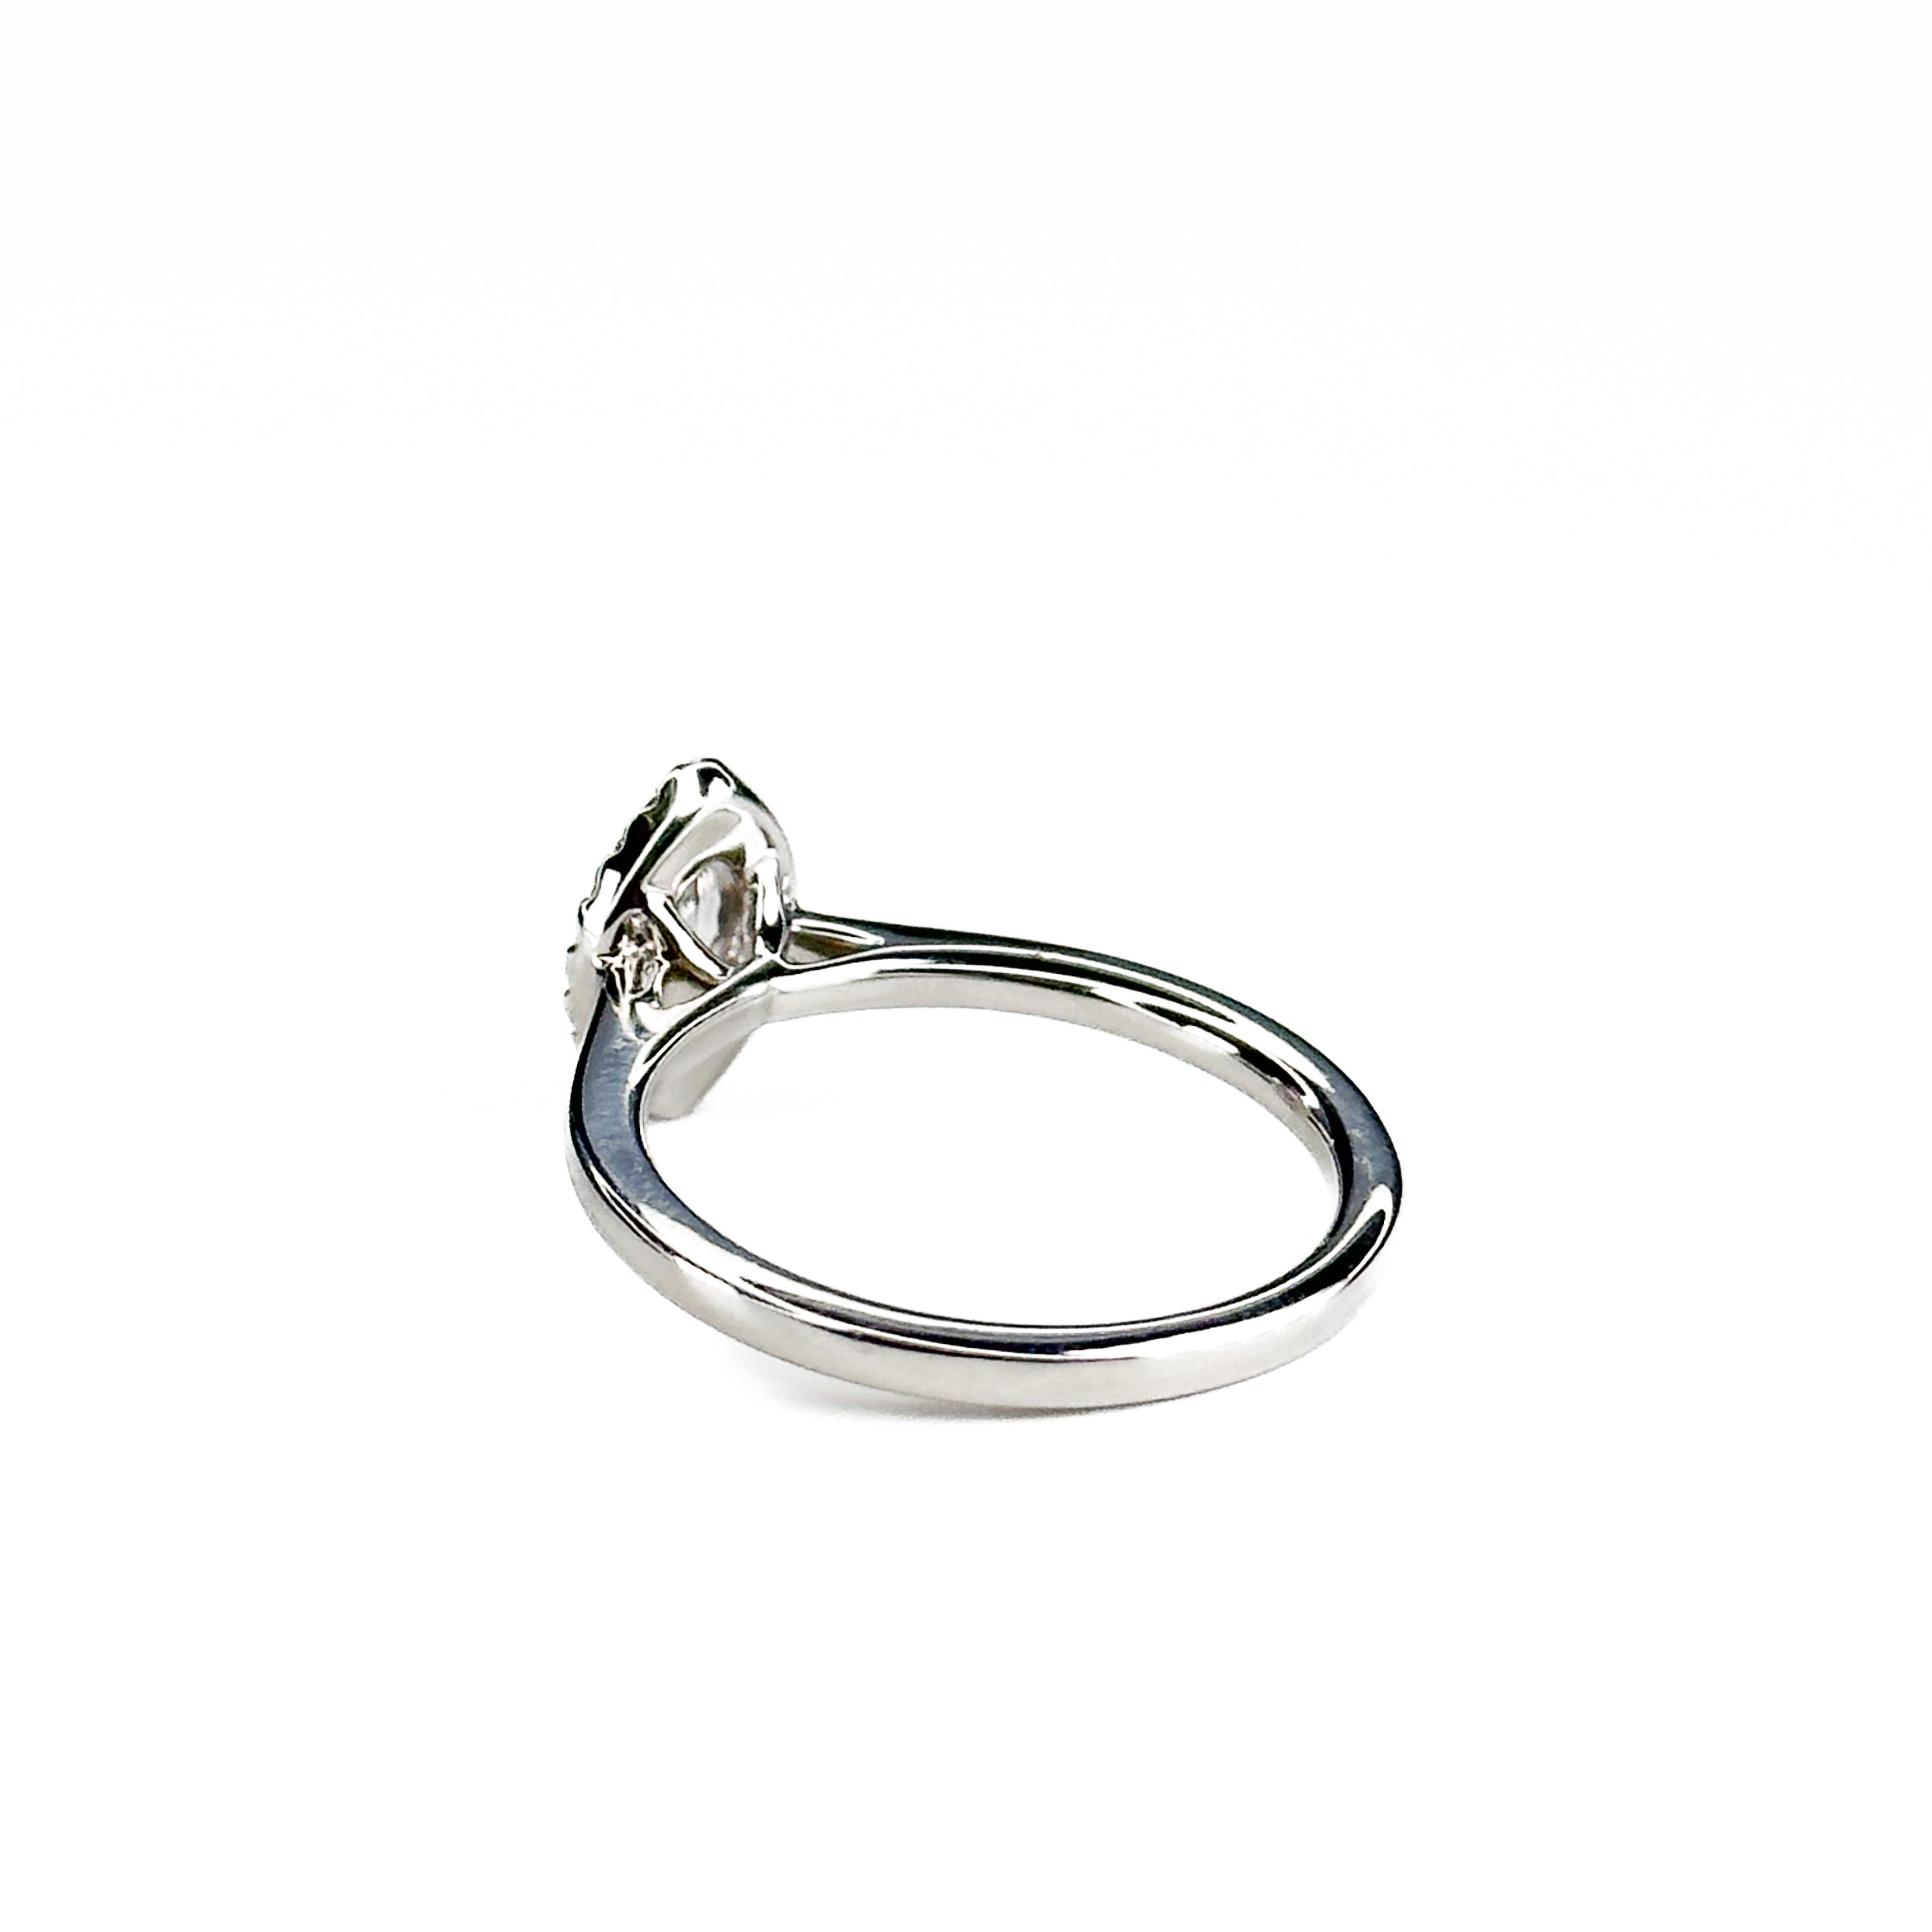 0.33ct Marquise Cut Diamond Ring